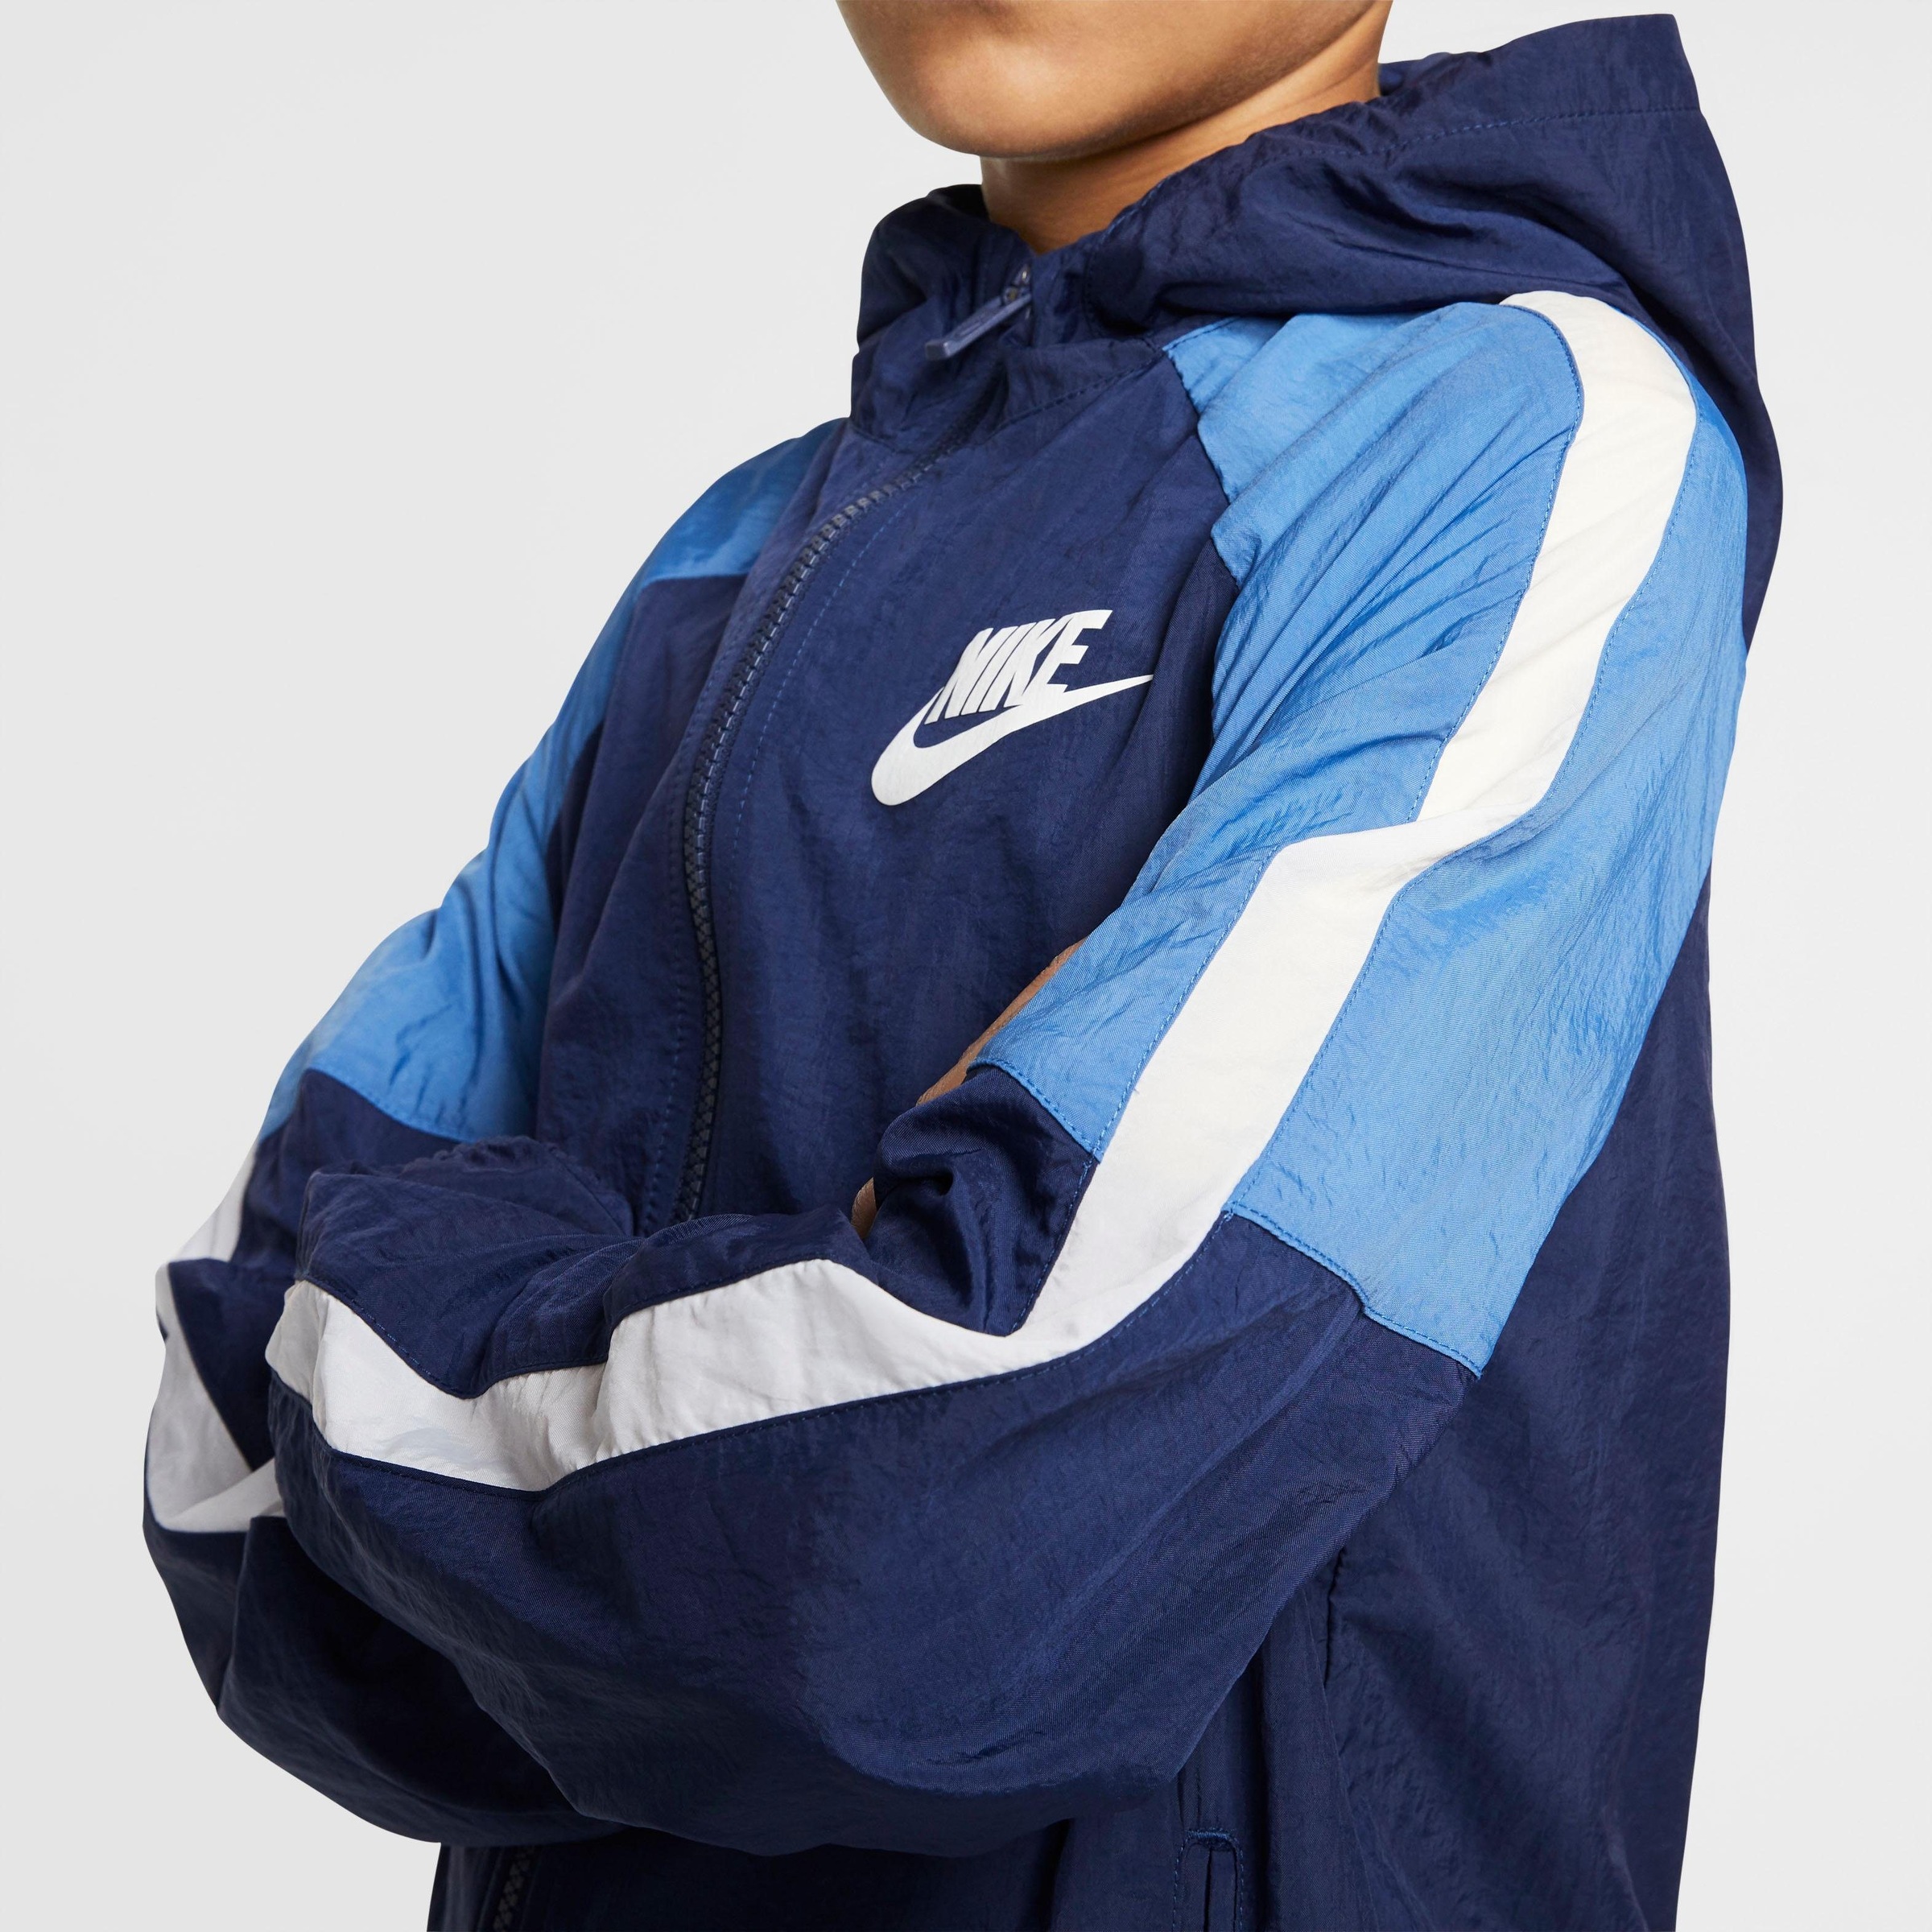 Nike Sportswear Trainingsanzug »Boys\' Woven bei Tracksuit«